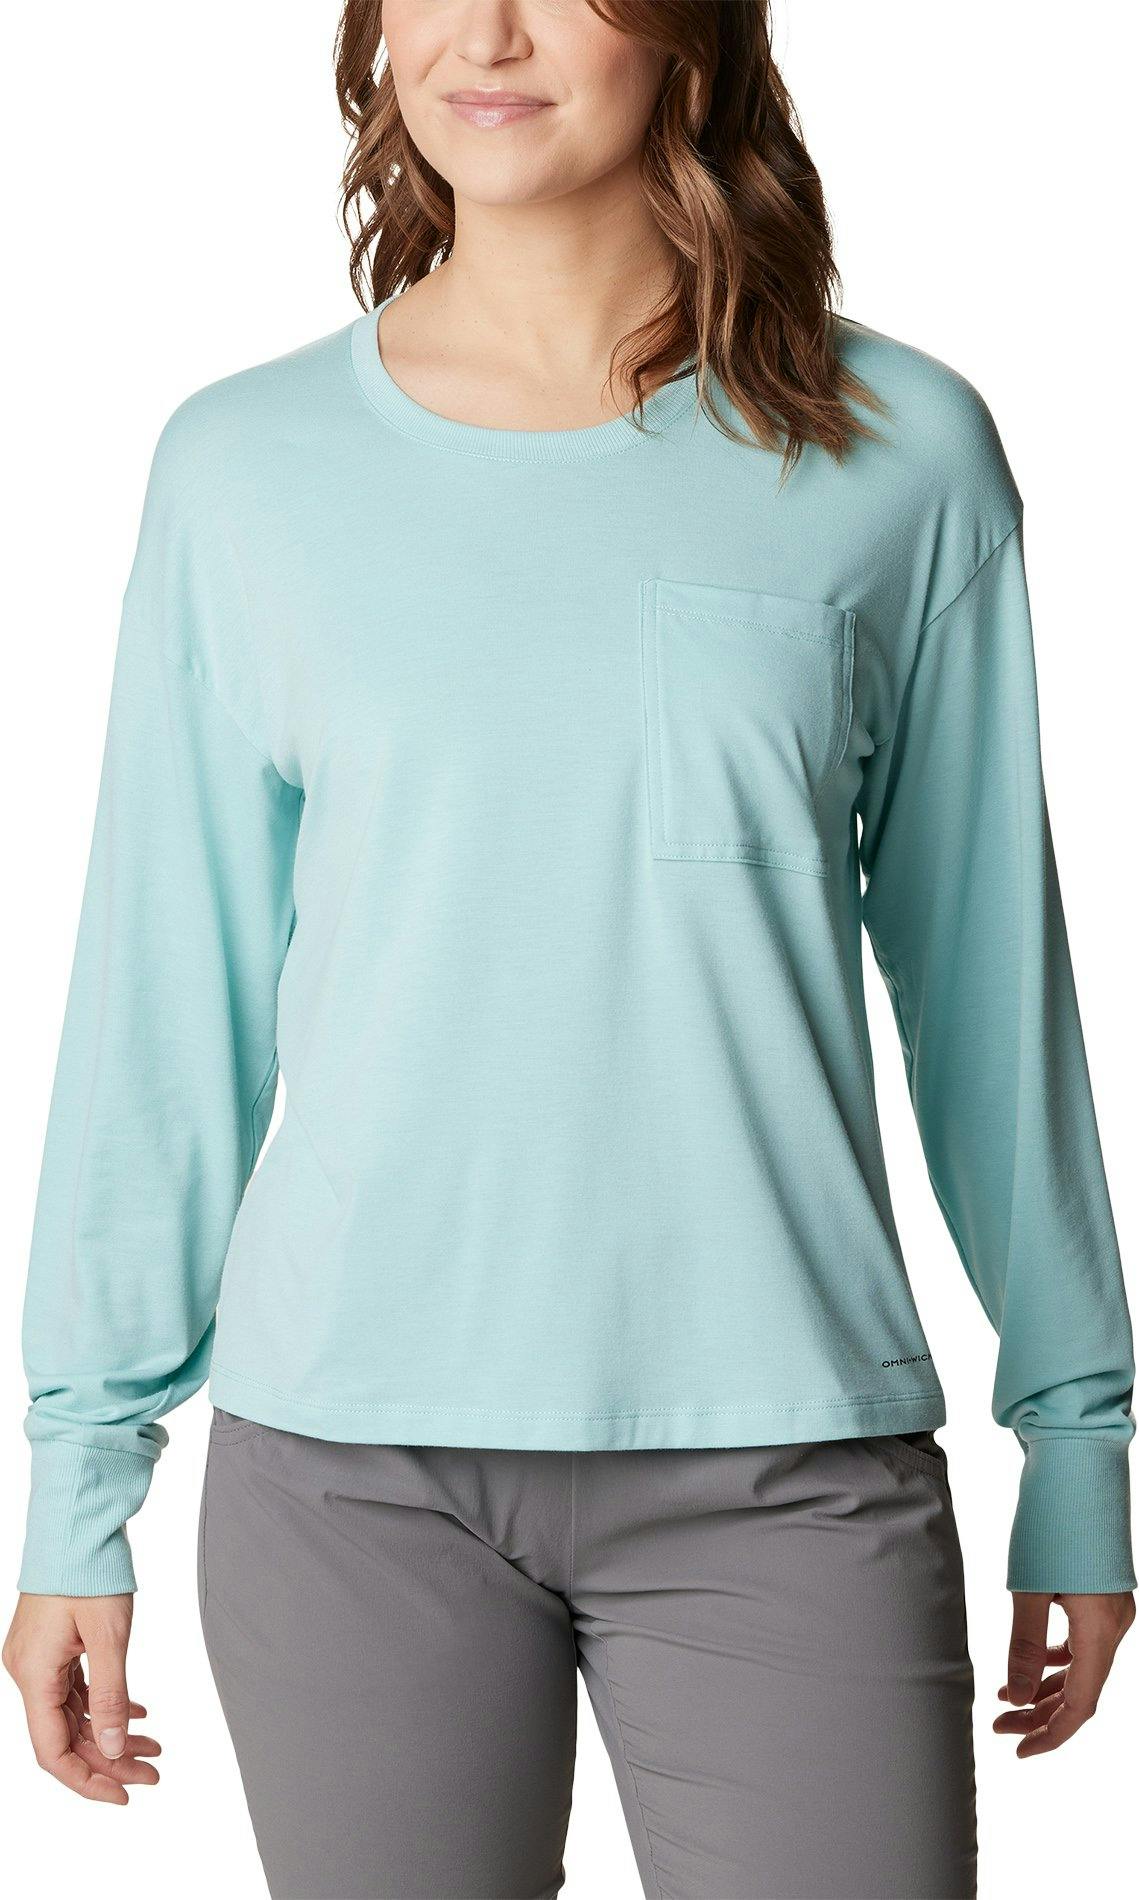 Product image for Boundless Trek Long Sleeve T-Shirt - Women's